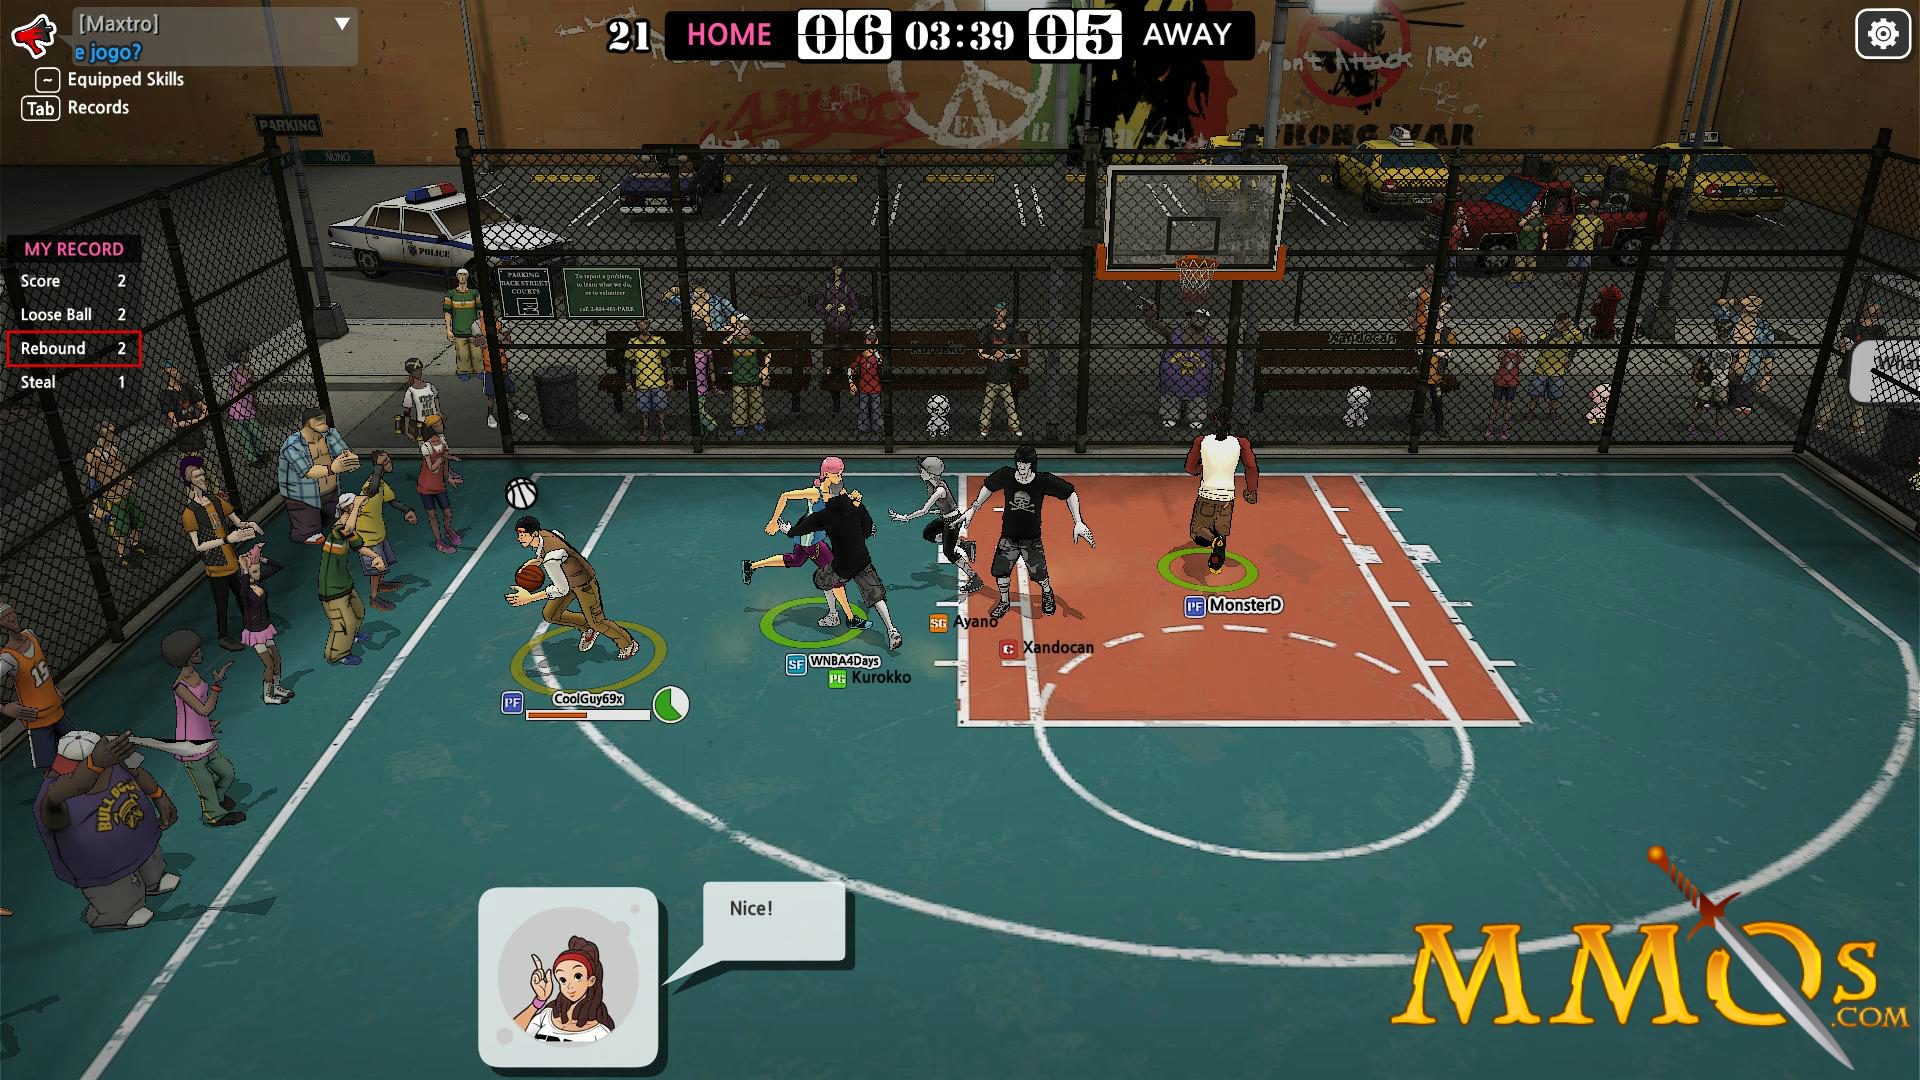 Freestyle 2: Street Basketball on Steam